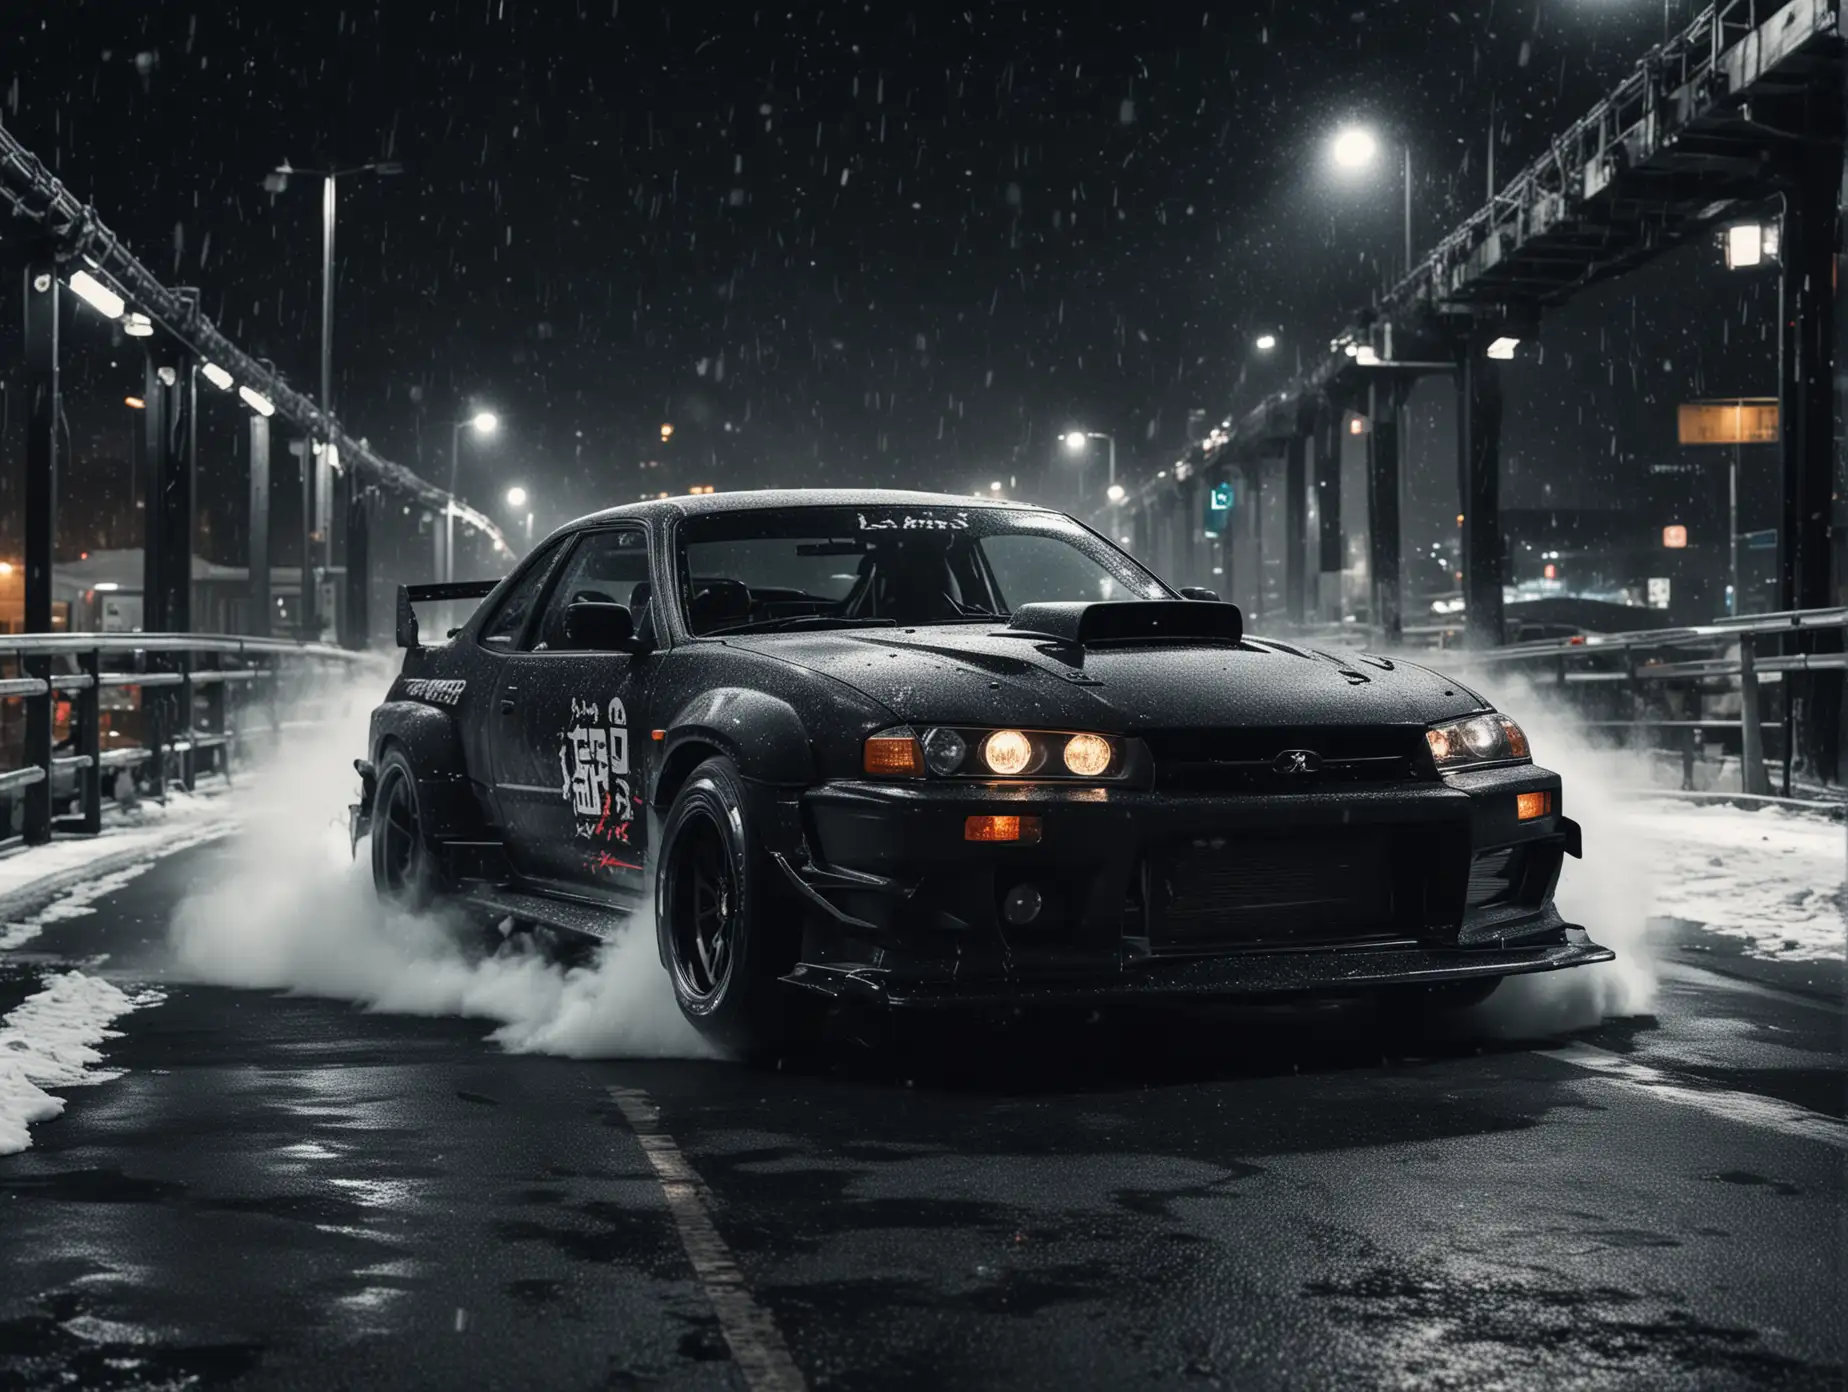 Japanese-Drift-Car-Monsters-Racing-Through-Night-City-on-Bridge